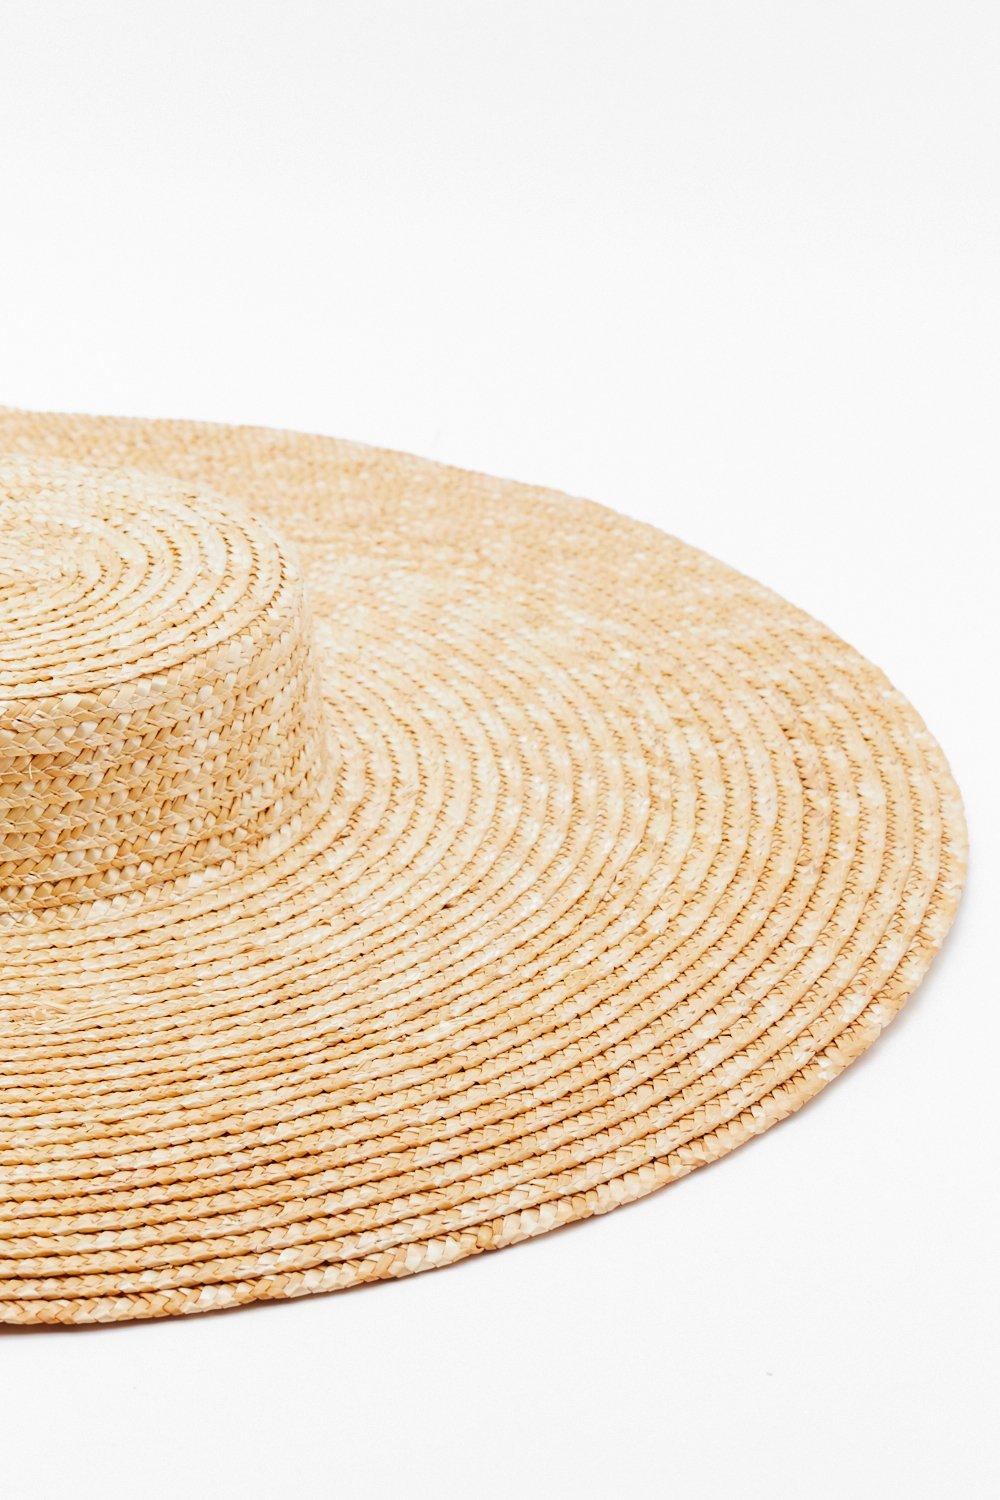 15cm Wide Brim Straw Hat Flat Top Summer Beach Hats For Women